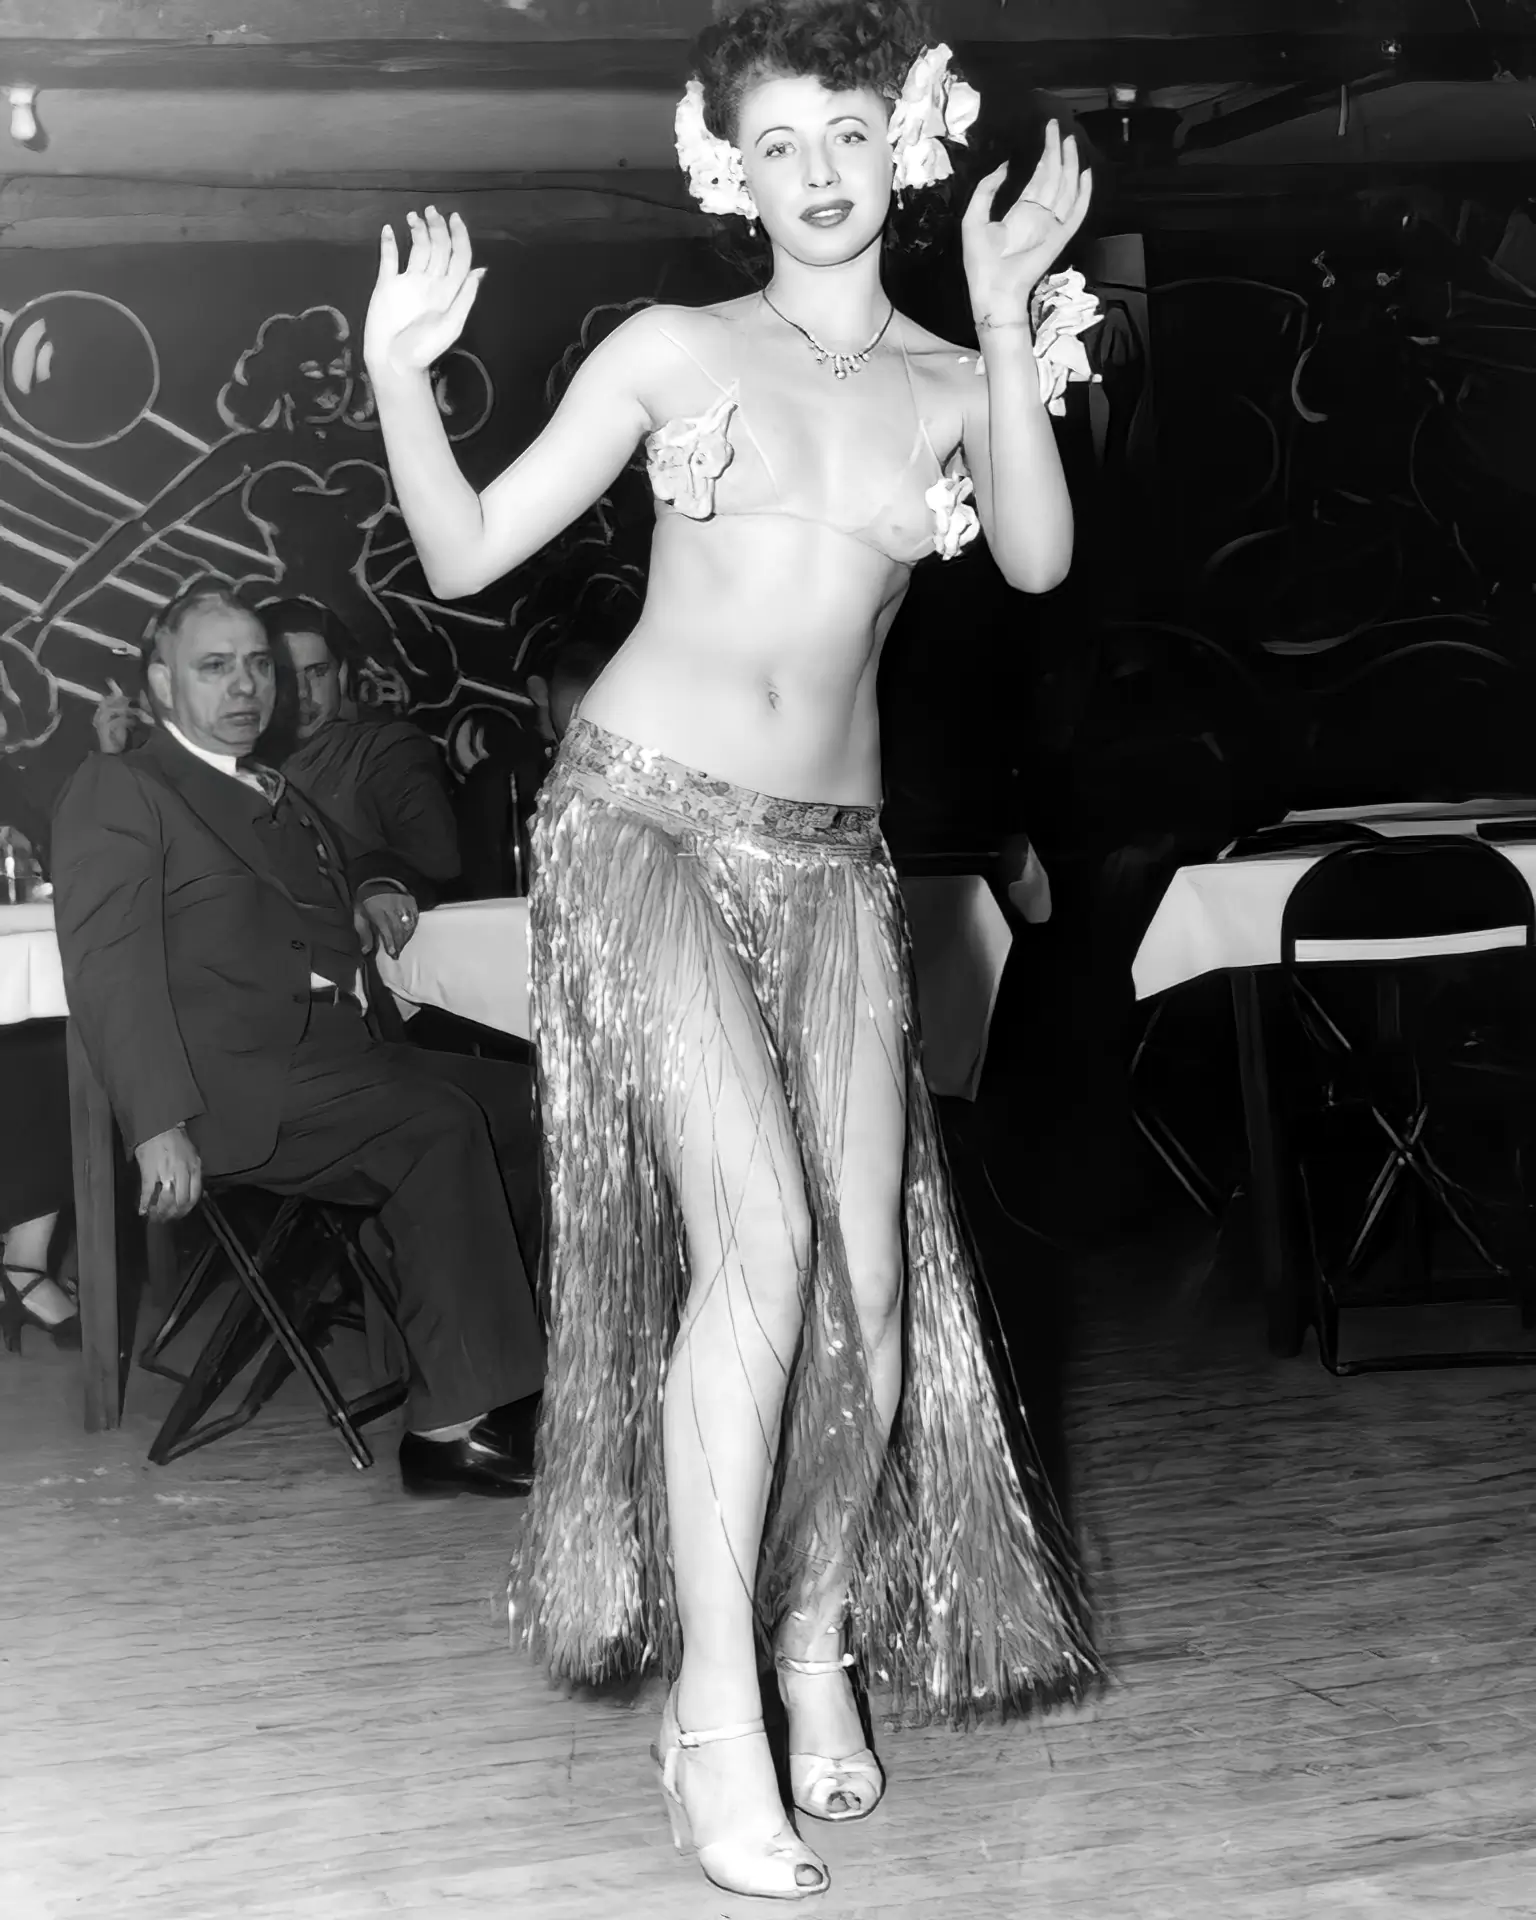 Skinny burlesque lady dances in a room full of men in her lambada skirt